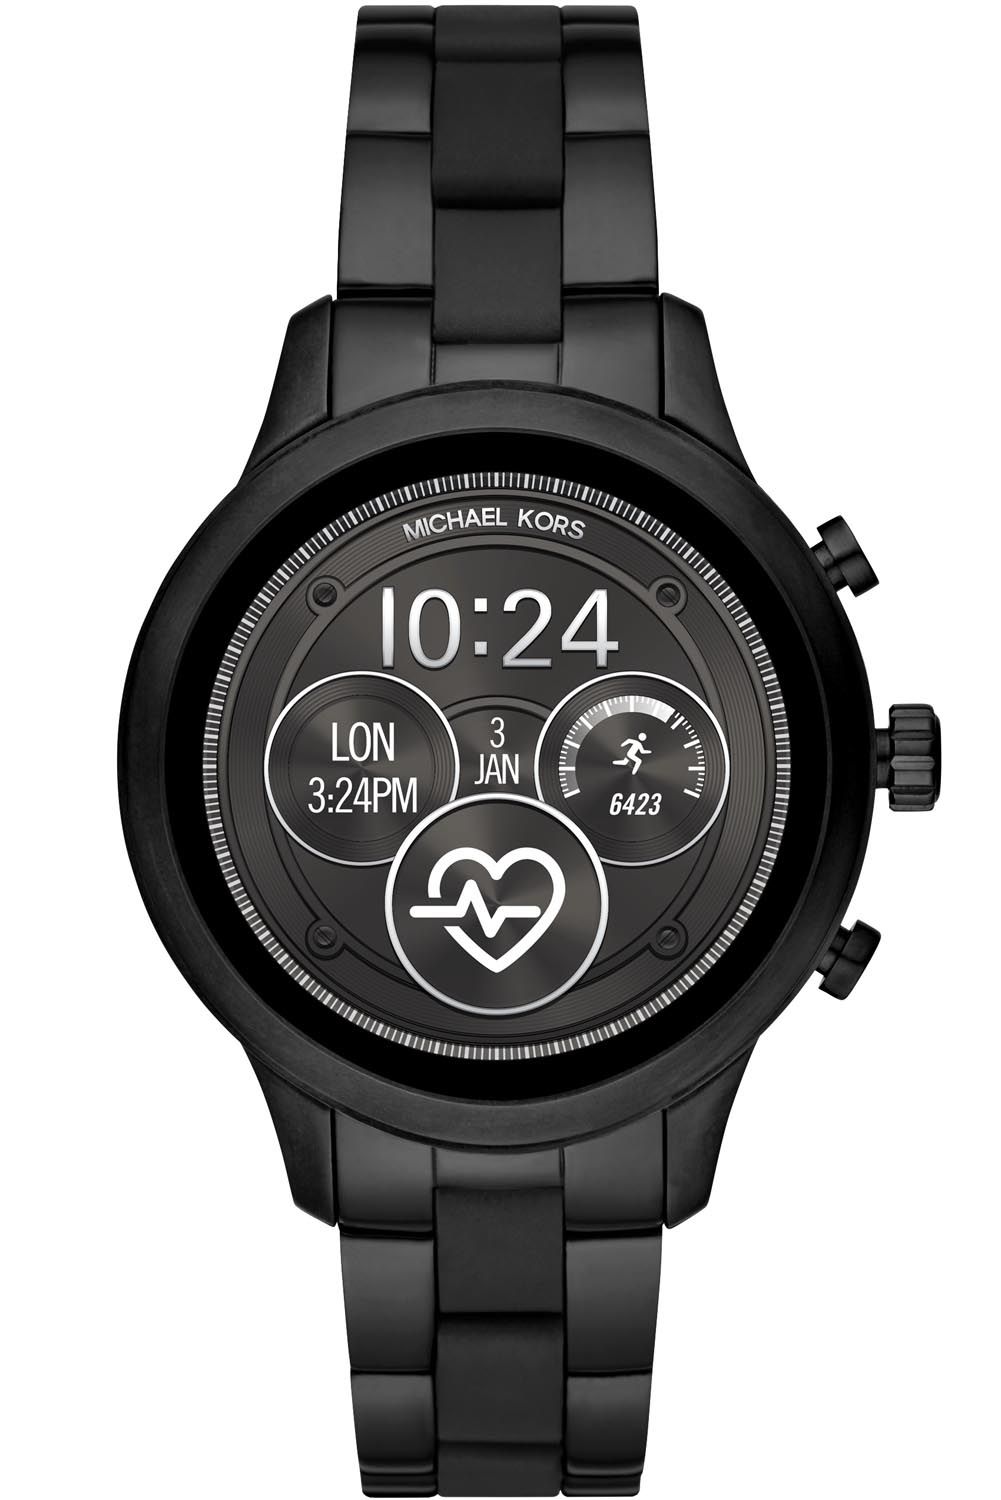 michael kors smartwatch uk sale